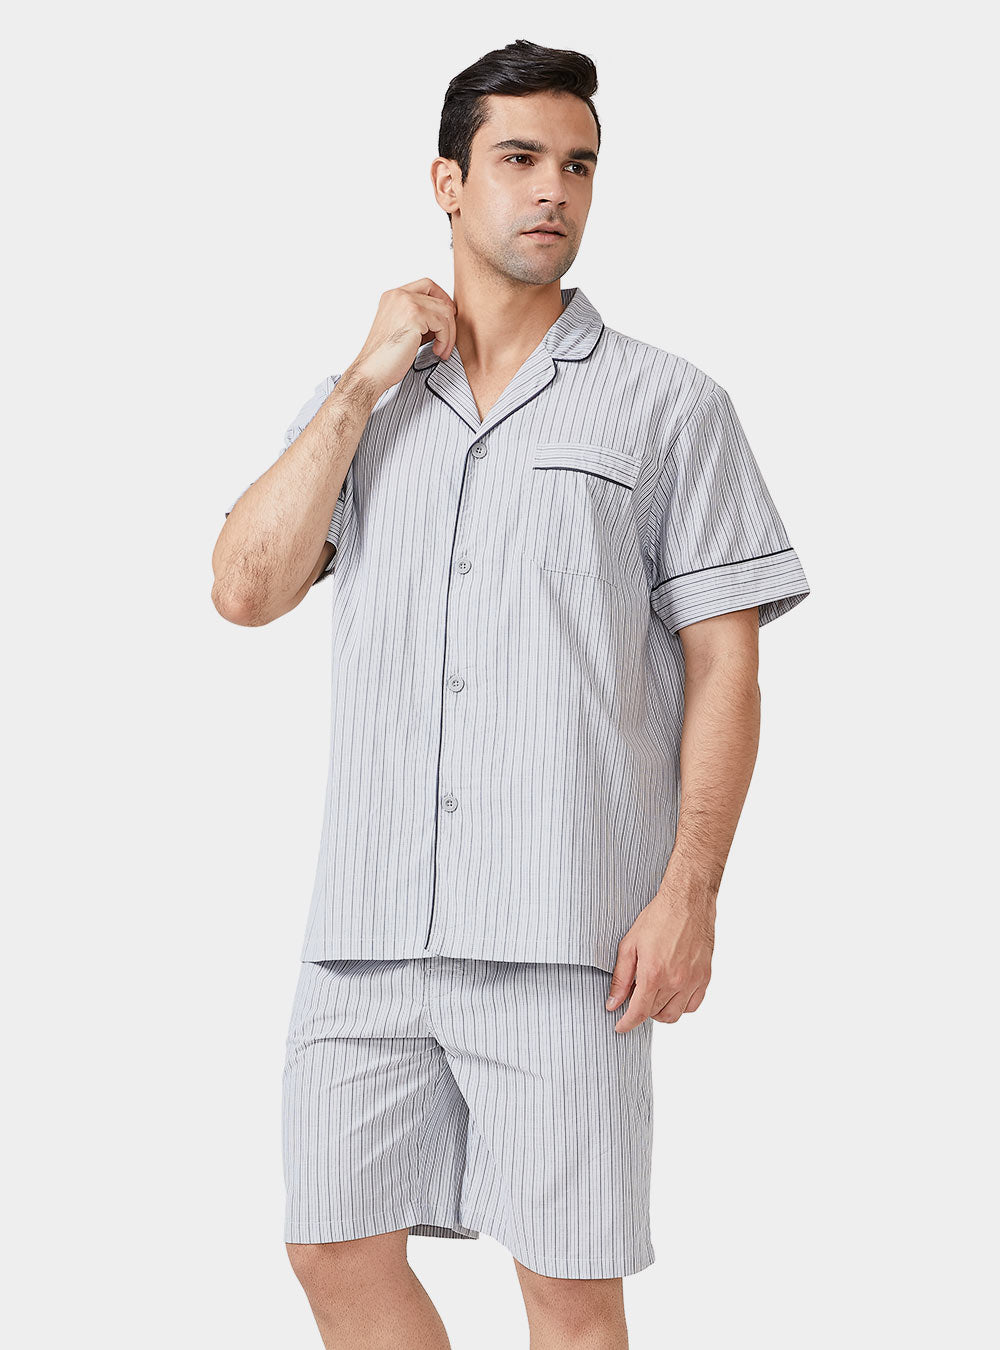 NACHILA Men's 2 Pack Pajama Shorts Sleep Shorts Soft Pajama Bottoms Comfy  Lounge Short,Viscose Made from Bamboo